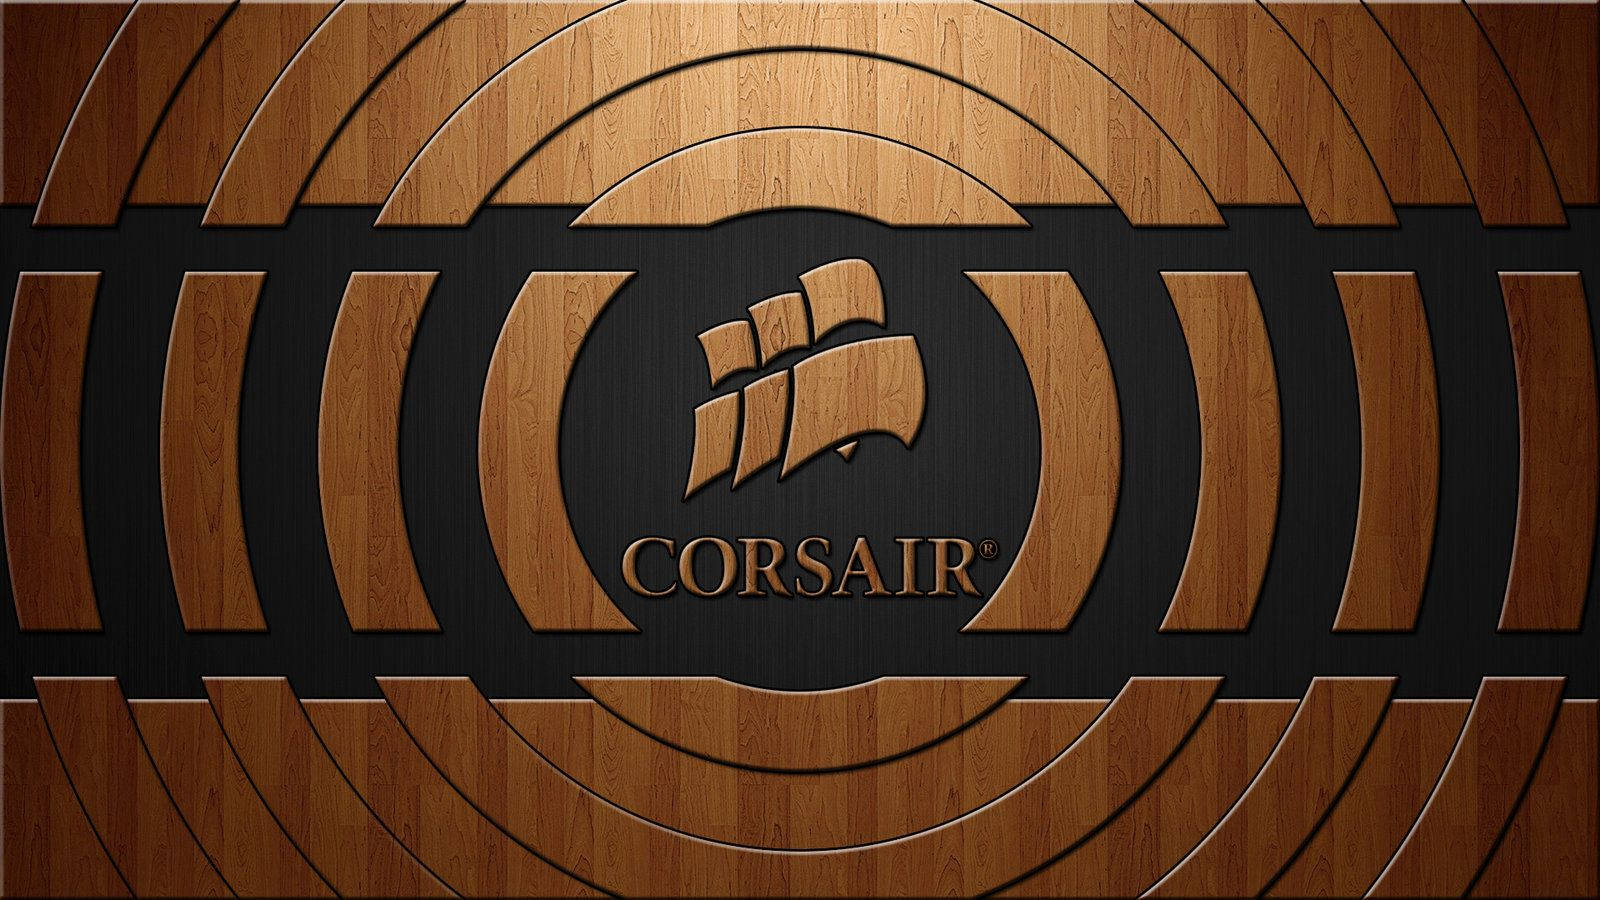 Corsair Logo Wooden Circles Background